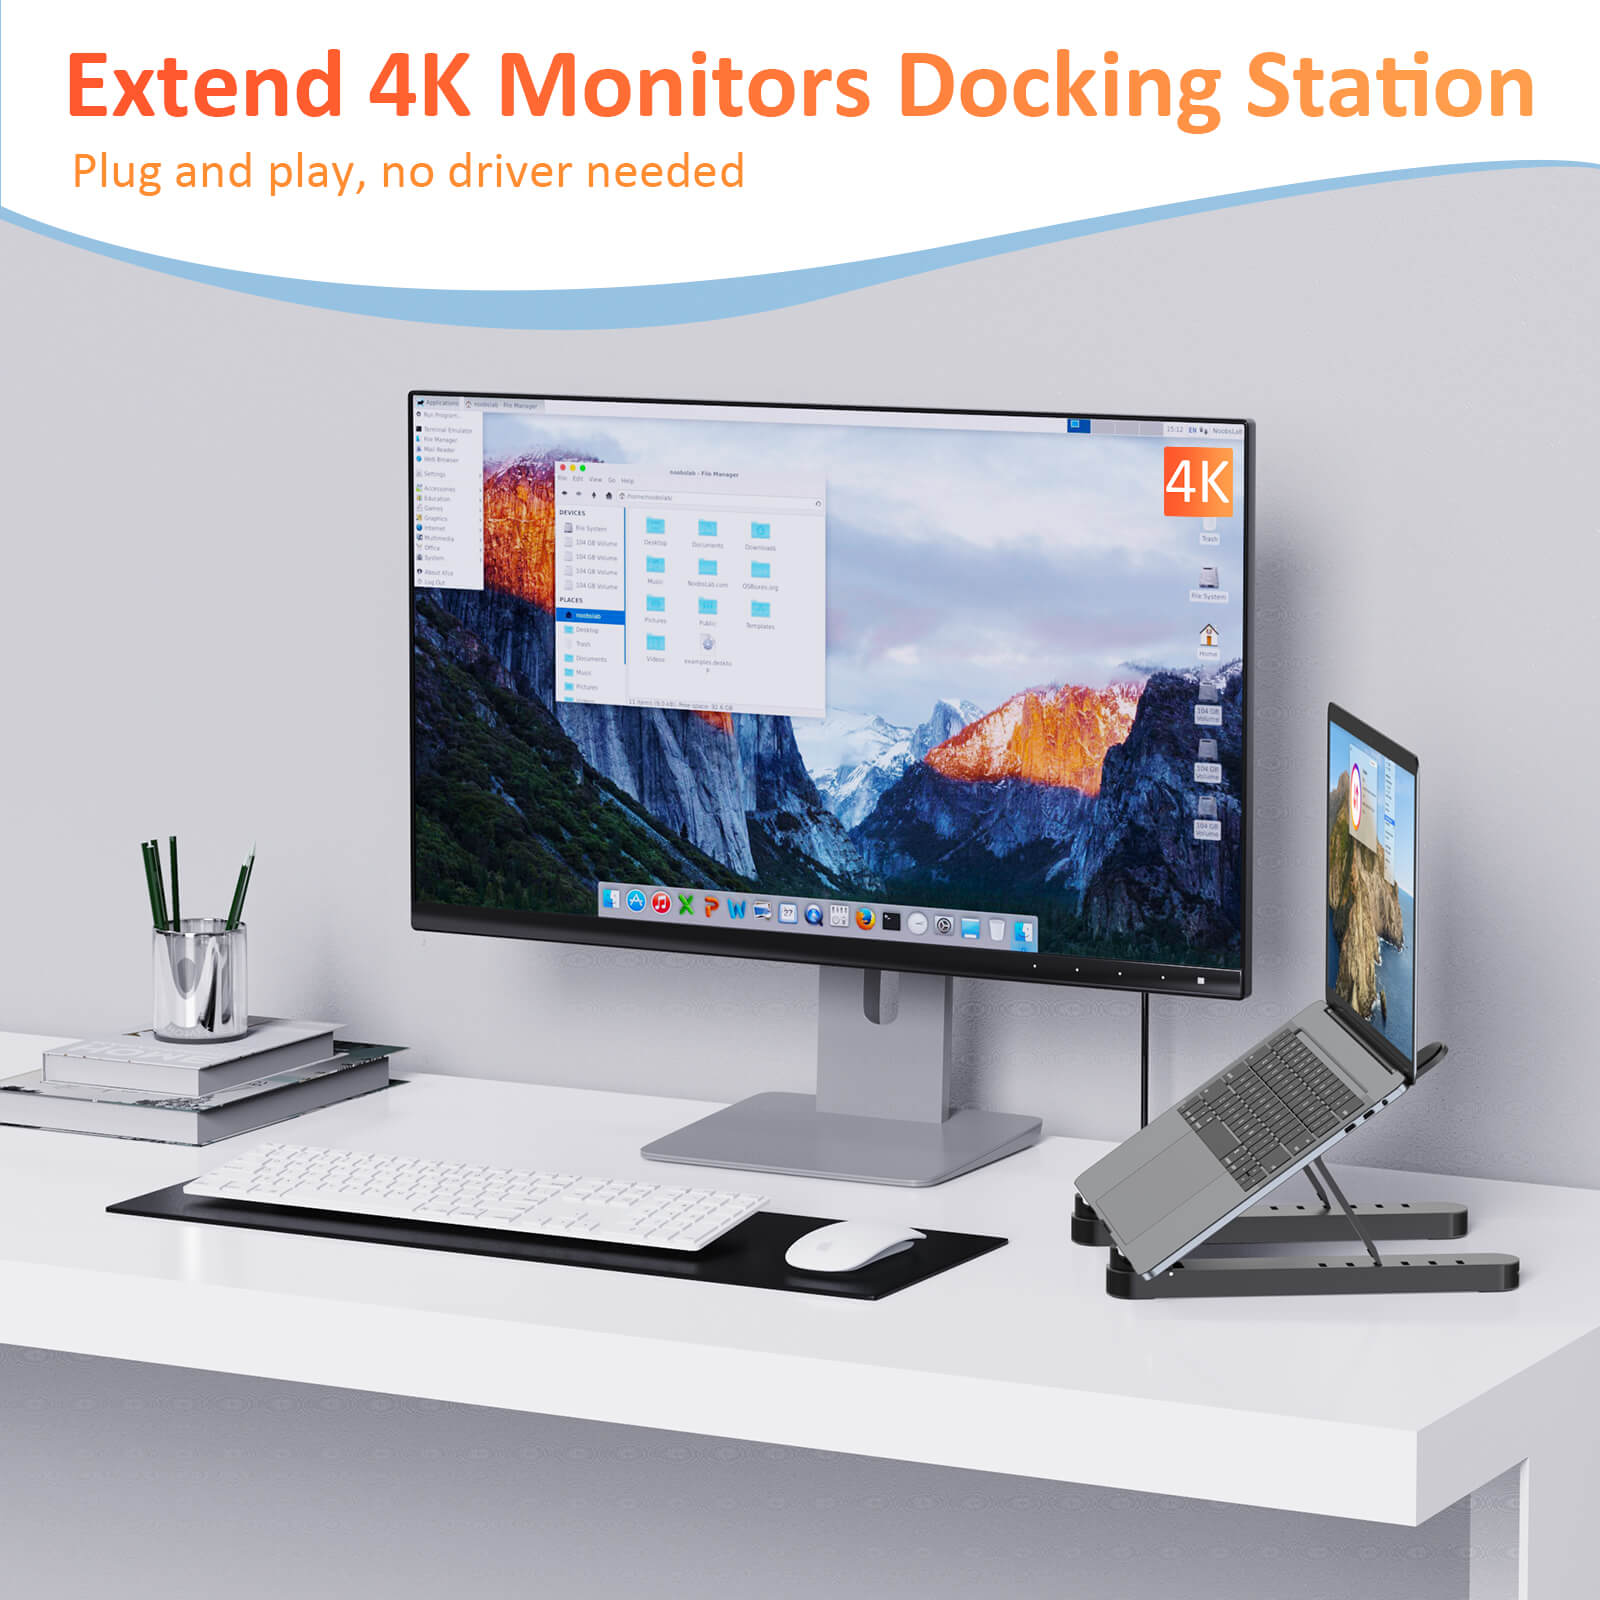 UDS024 Universal Docking Station USB 3.0 and USB C Docking Station